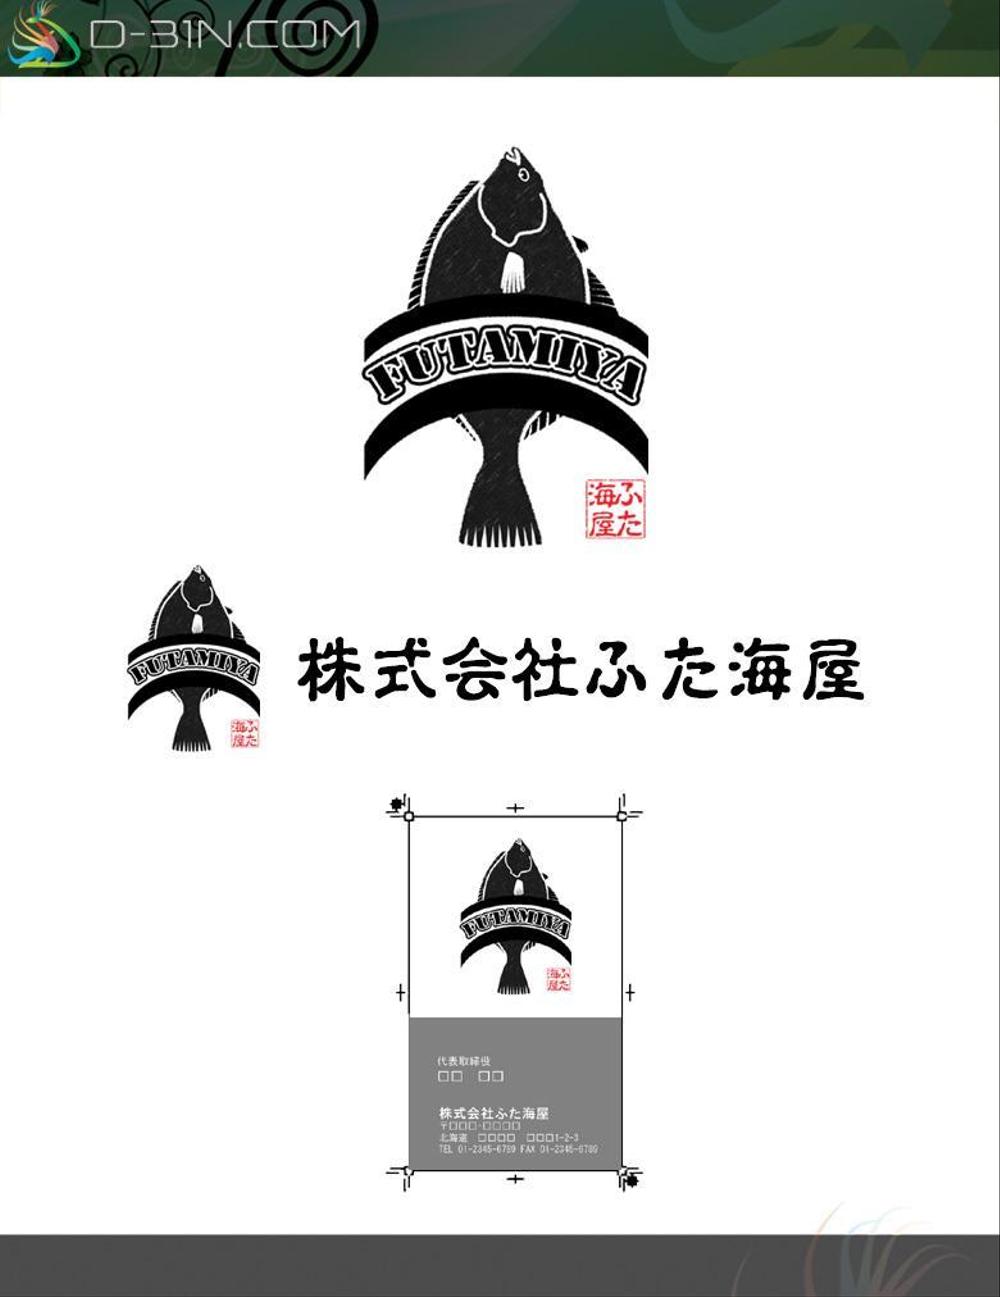 futamiya-logo01.jpg